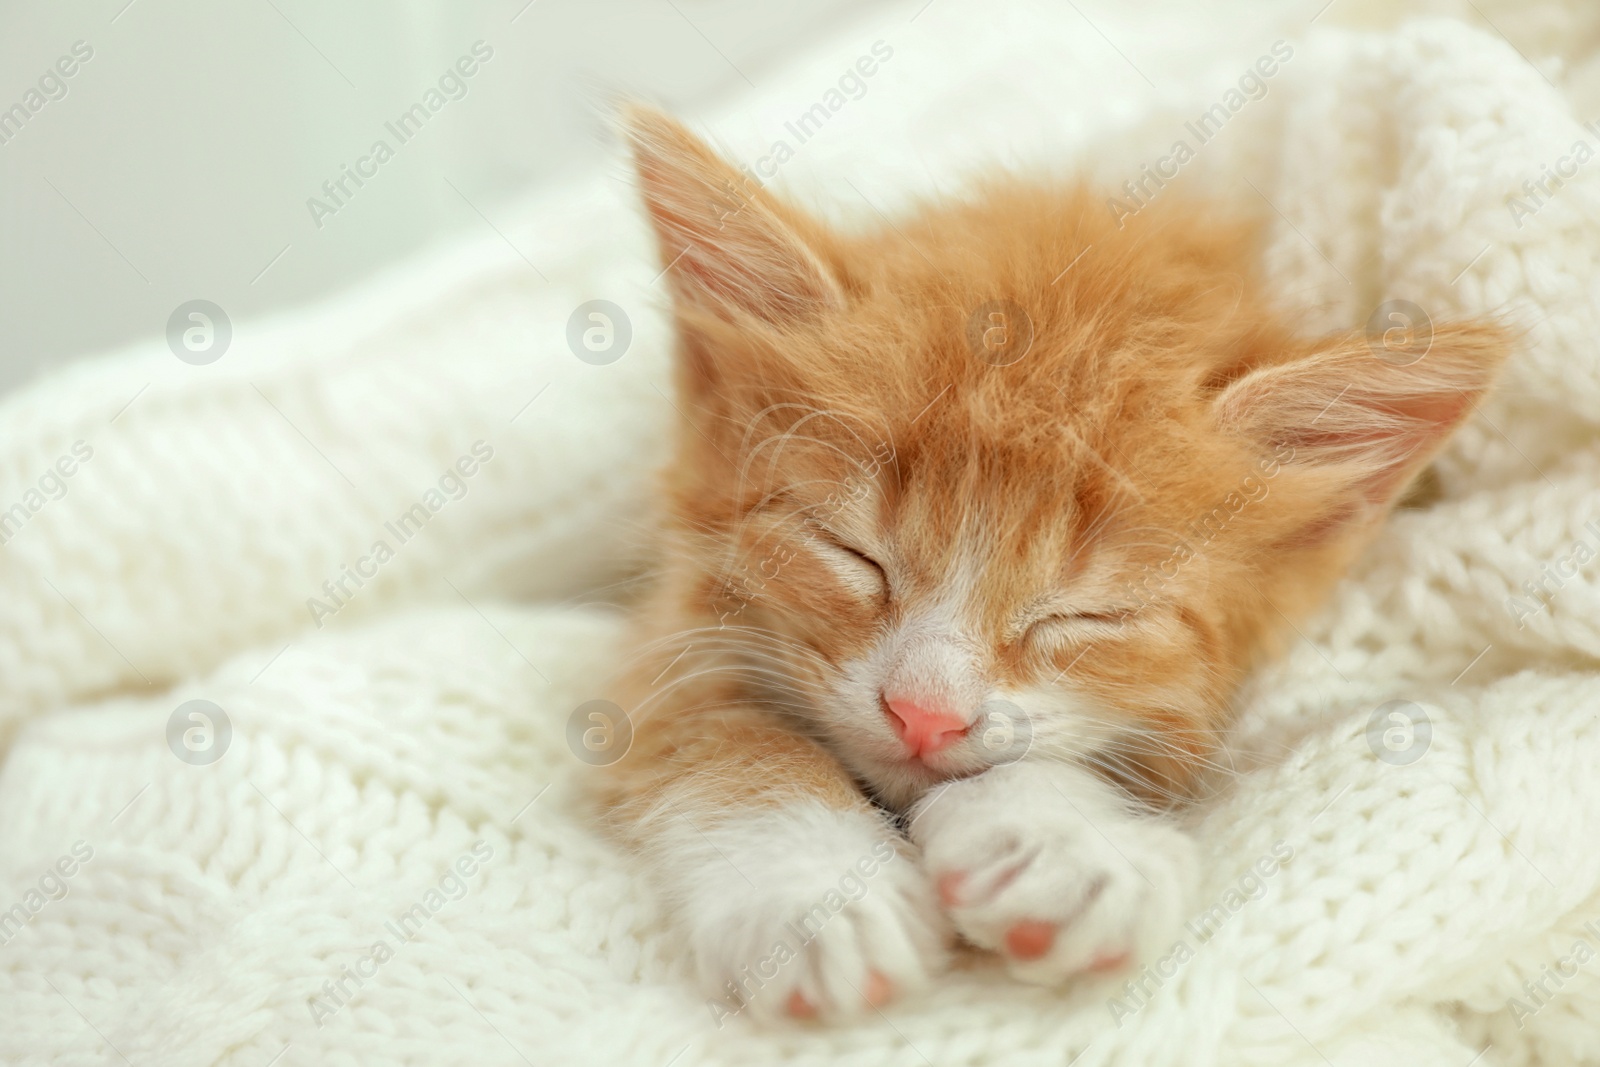 Photo of Cute little red kitten sleeping on white knitted blanket